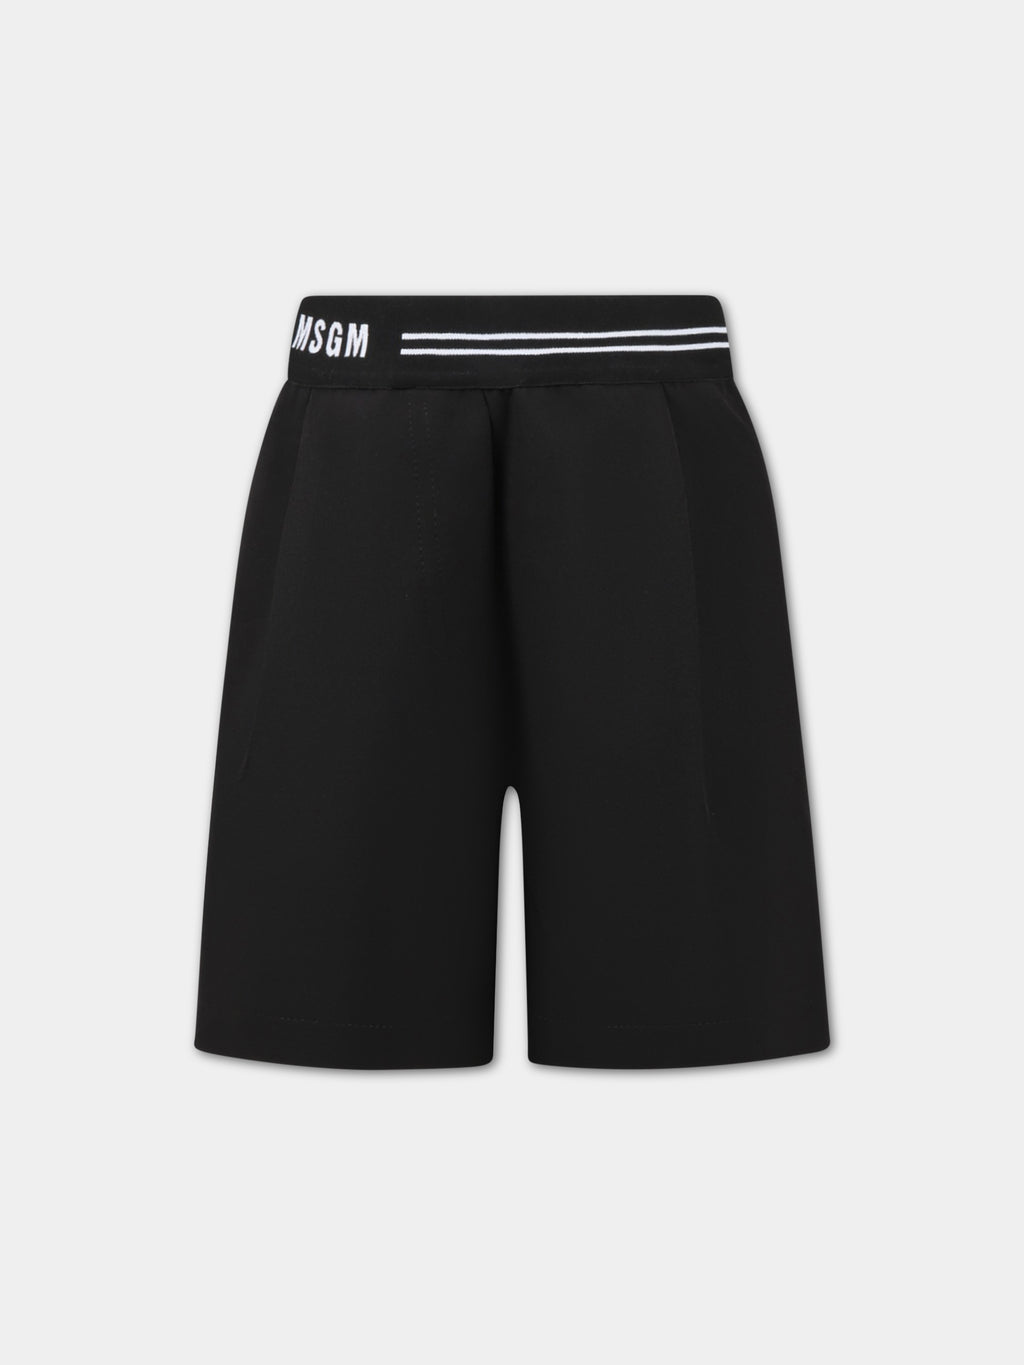 Black shorts for girl with white logo